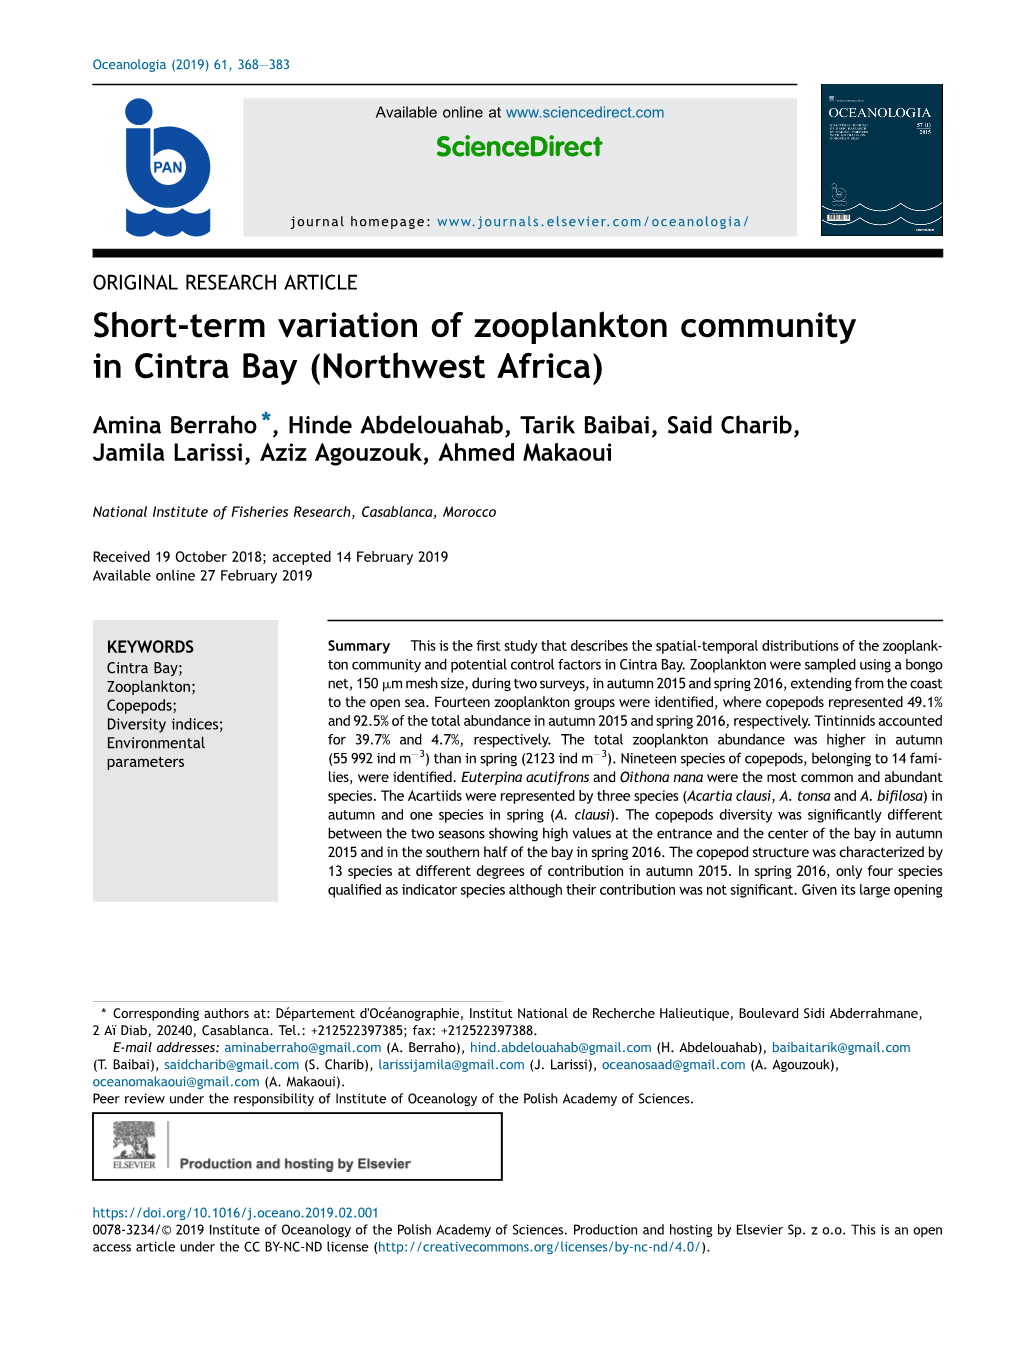 Short-Term Variation of Zooplankton Community in Cintra Bay (Northwest